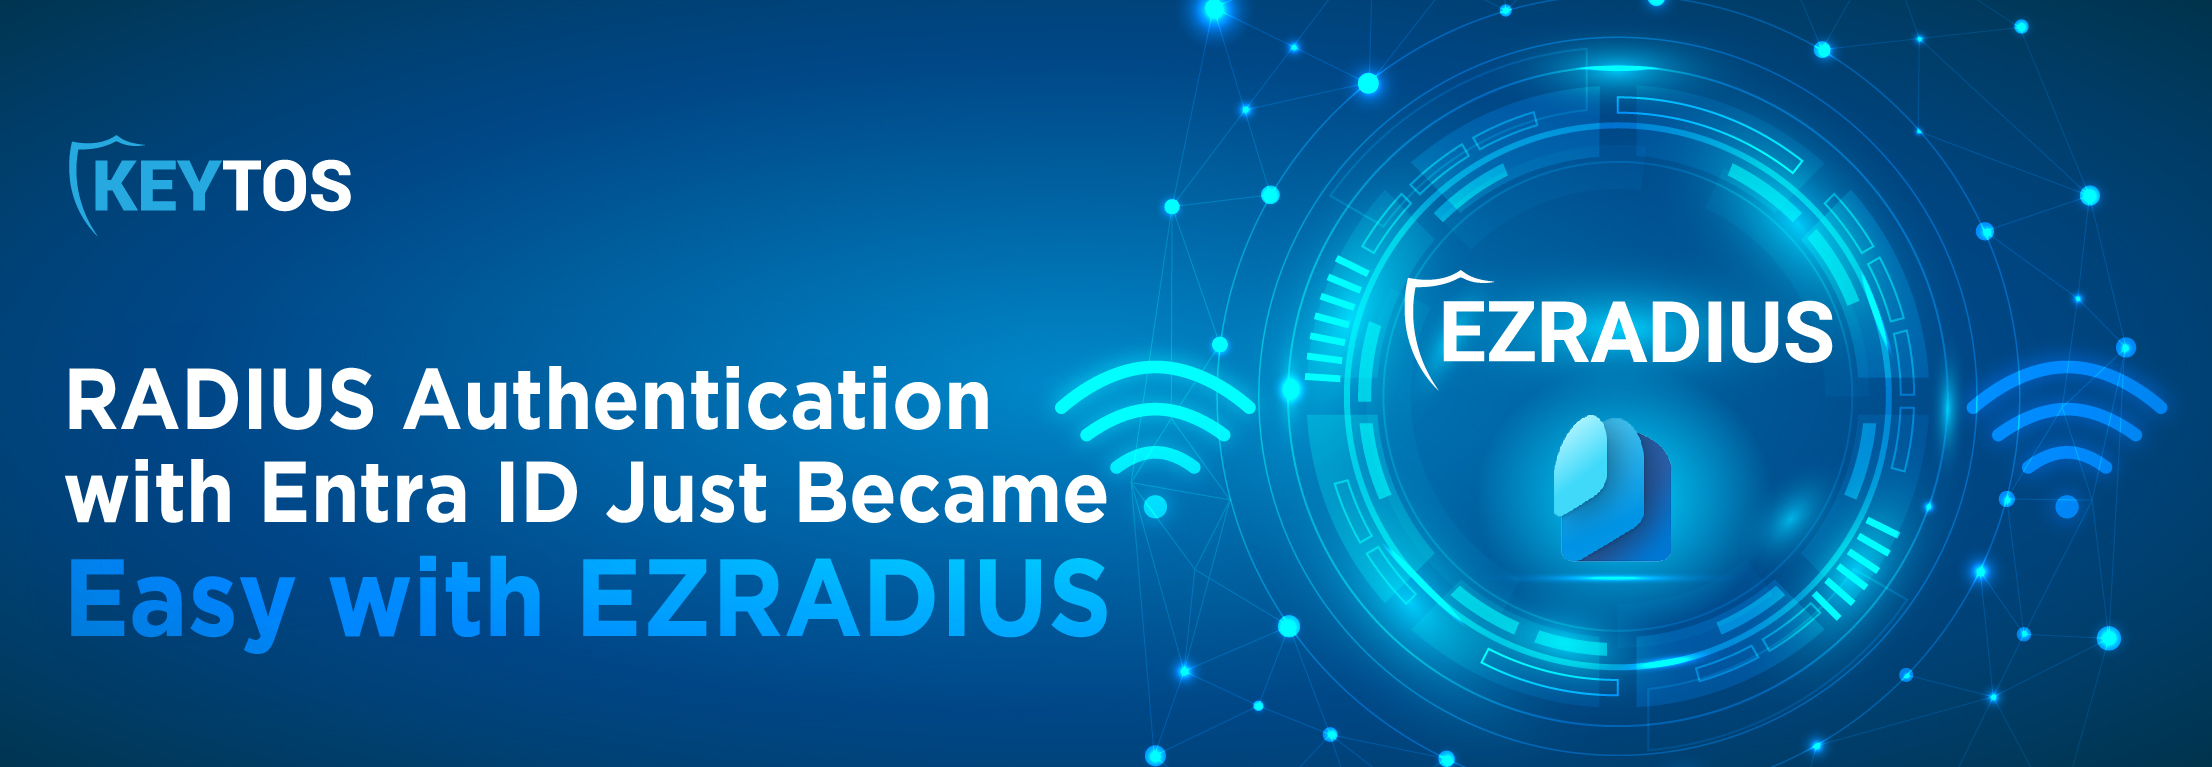 Cloud RADIUS Authentication Just Got Easier EZRADIUS - The New Cloud RADIUS Service from Keytos